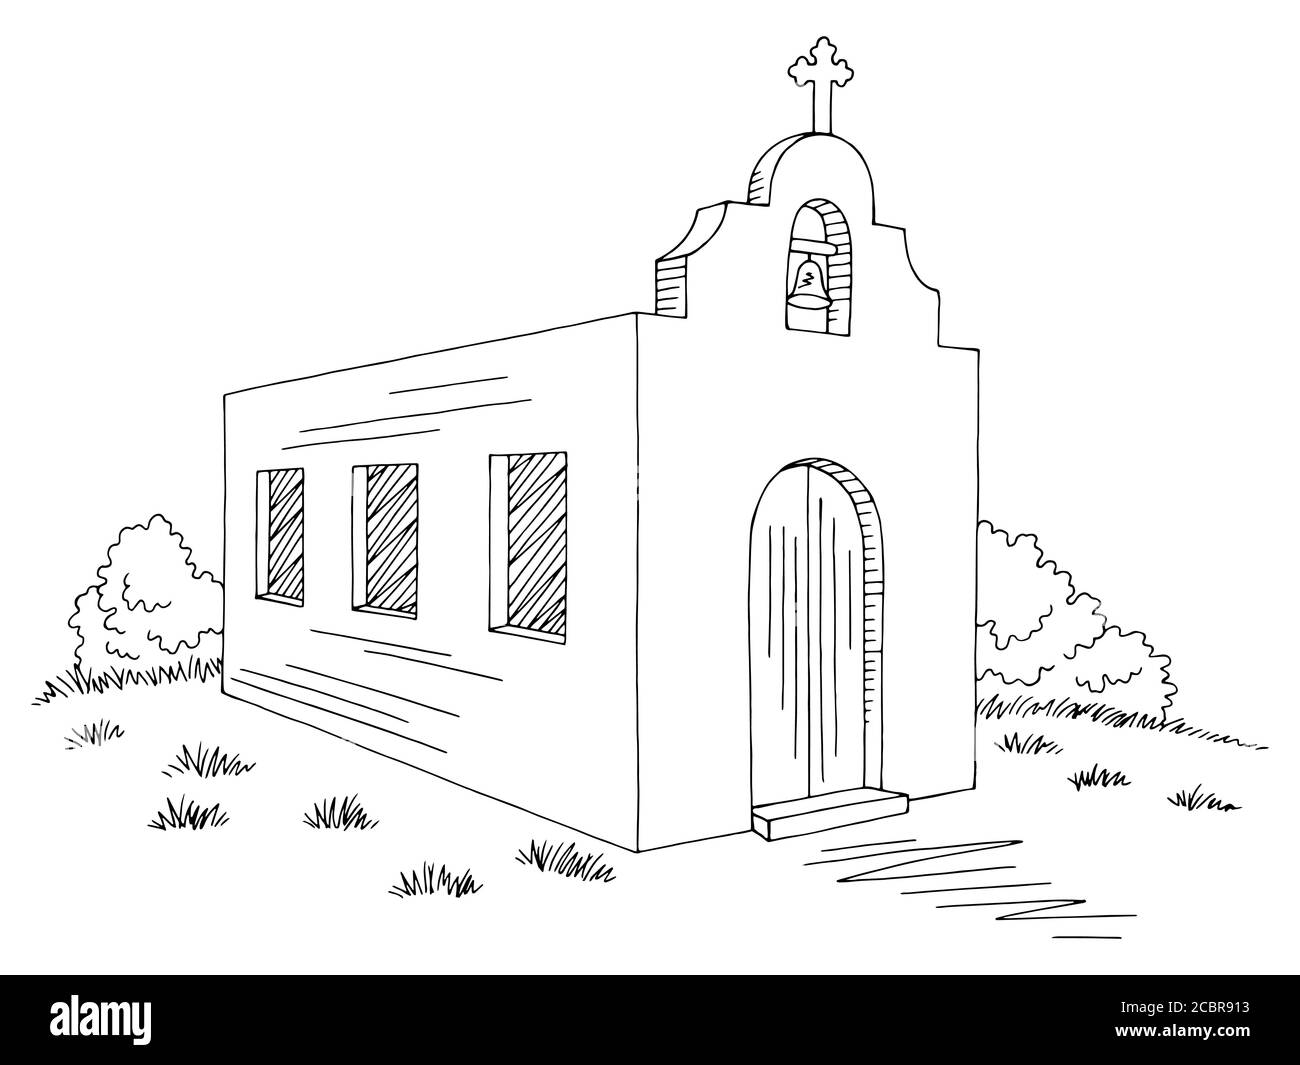 Kirche außen Grafik schwarz weiß Skizze Illustration Vektor Stock Vektor